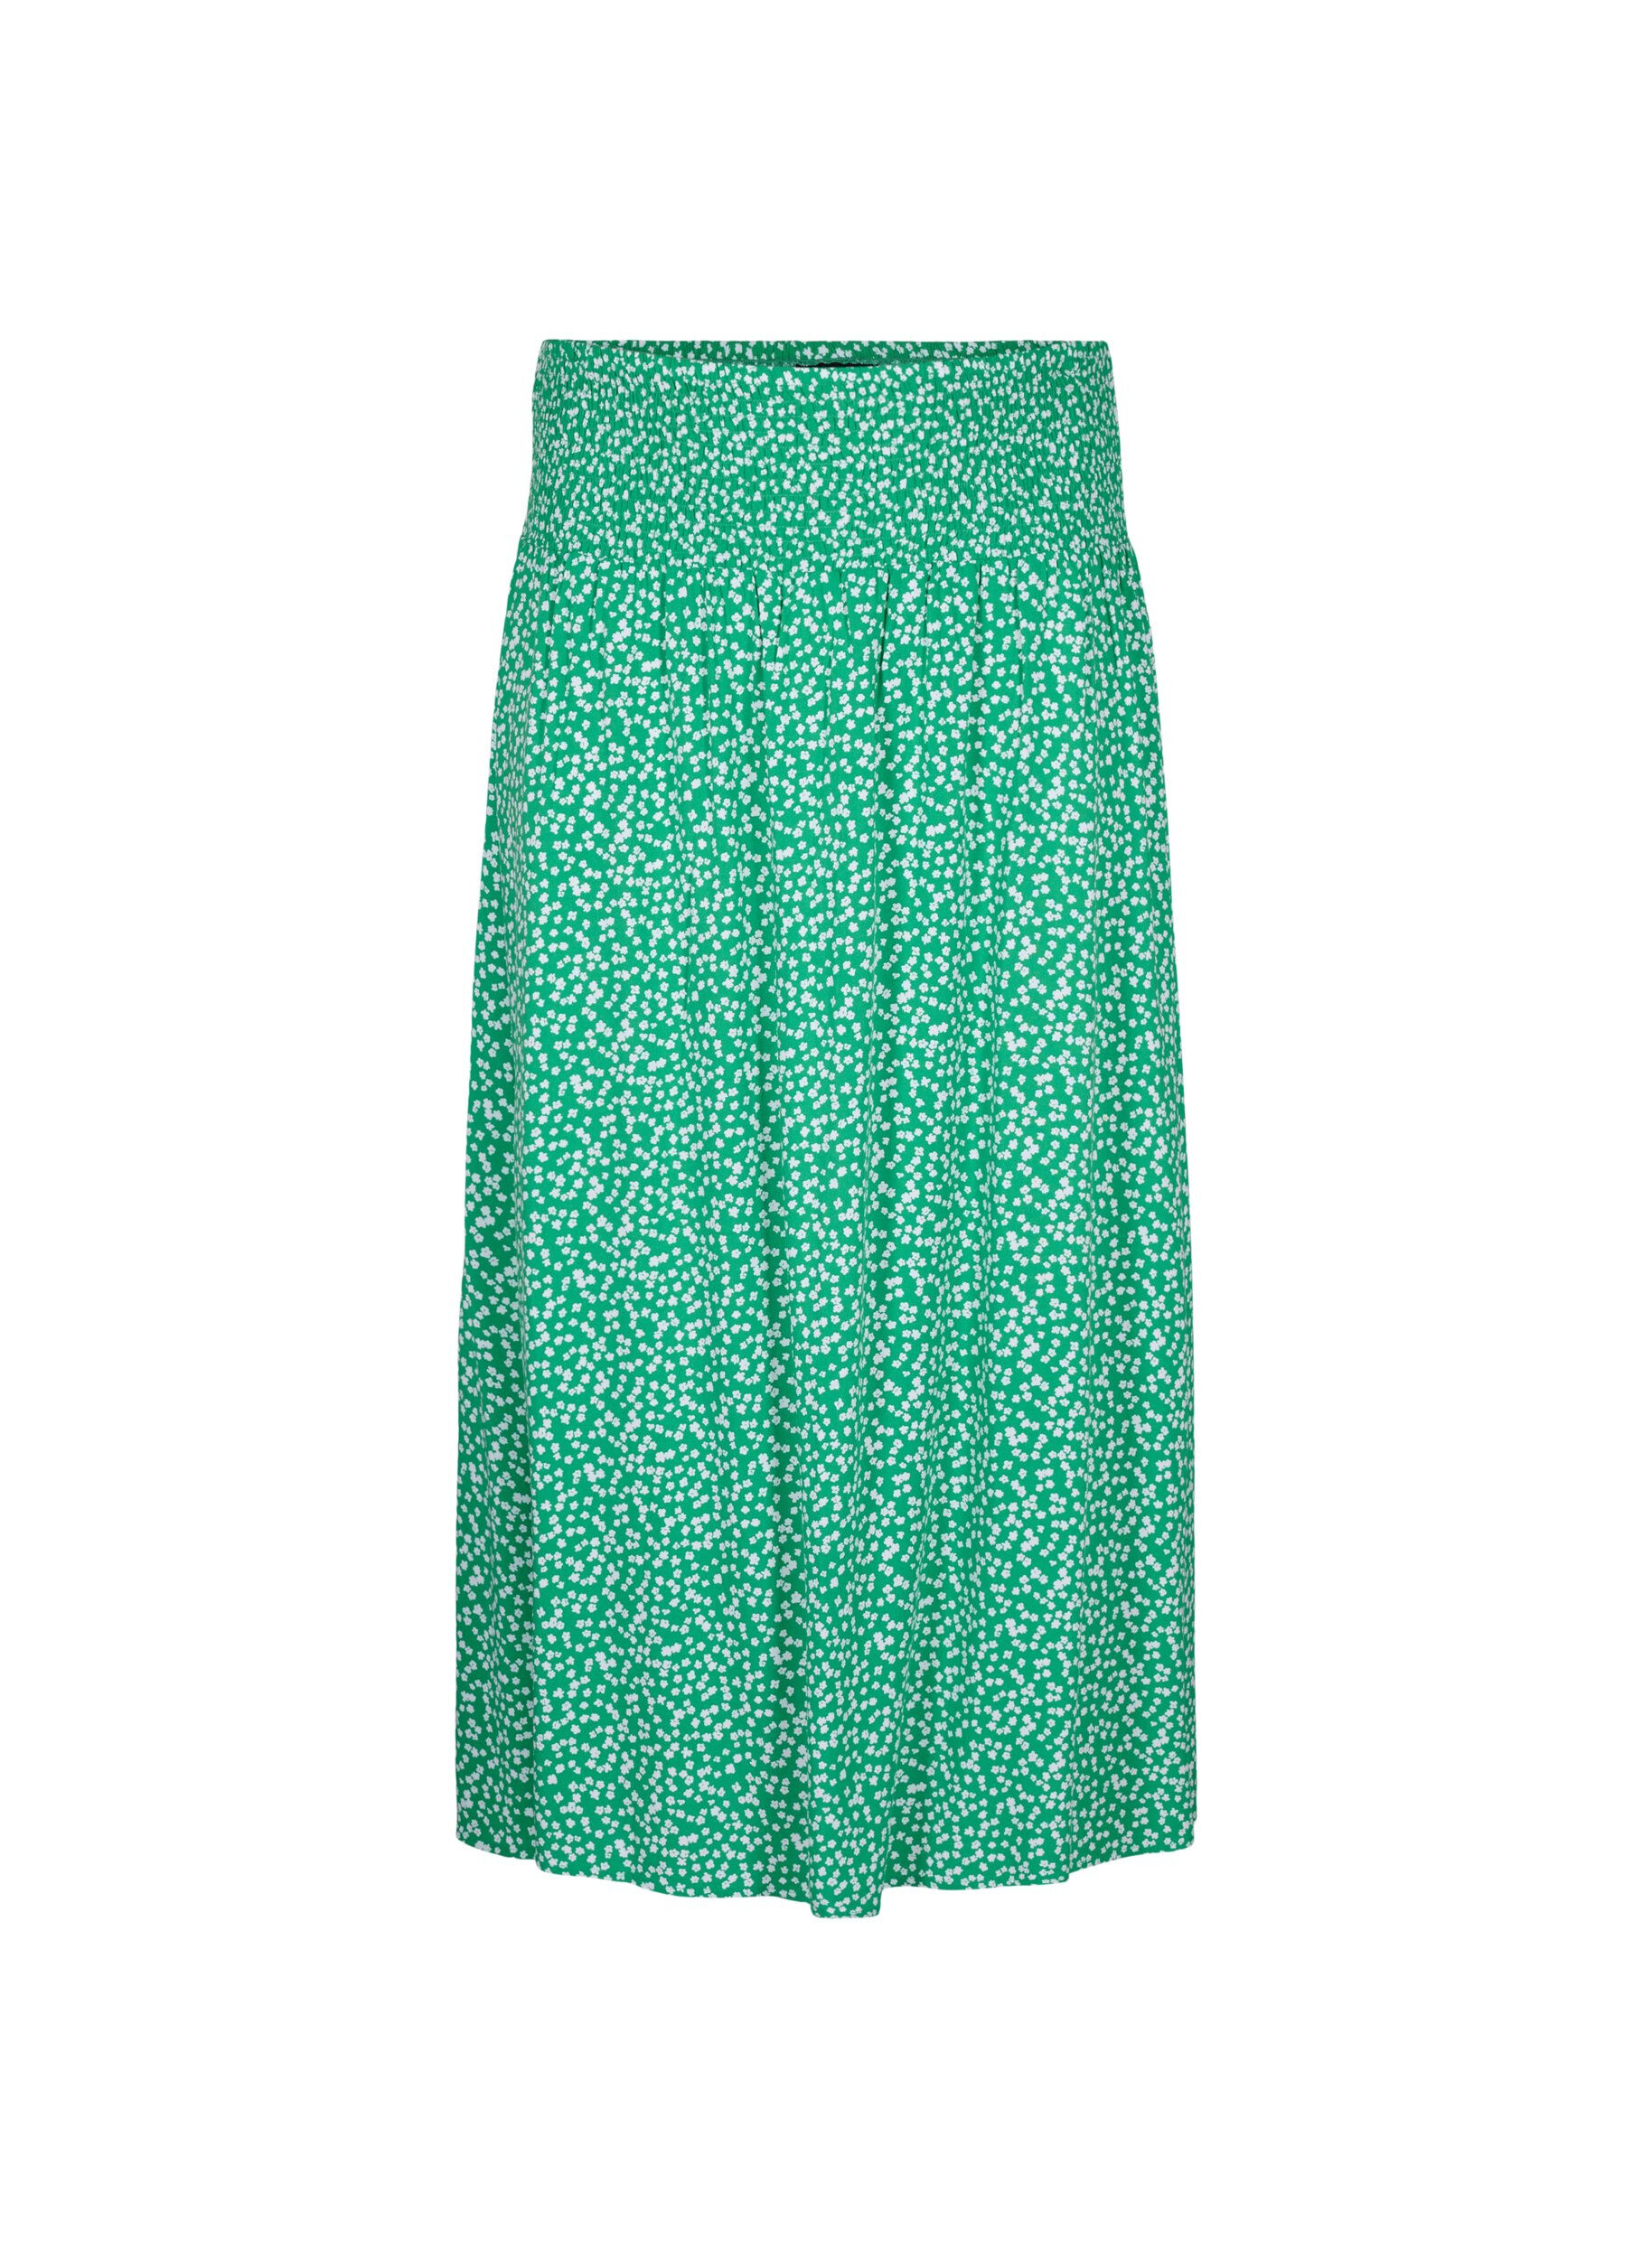 FLASH - Viscose maxi skirt with smocking - Green - Sz. 42-64 